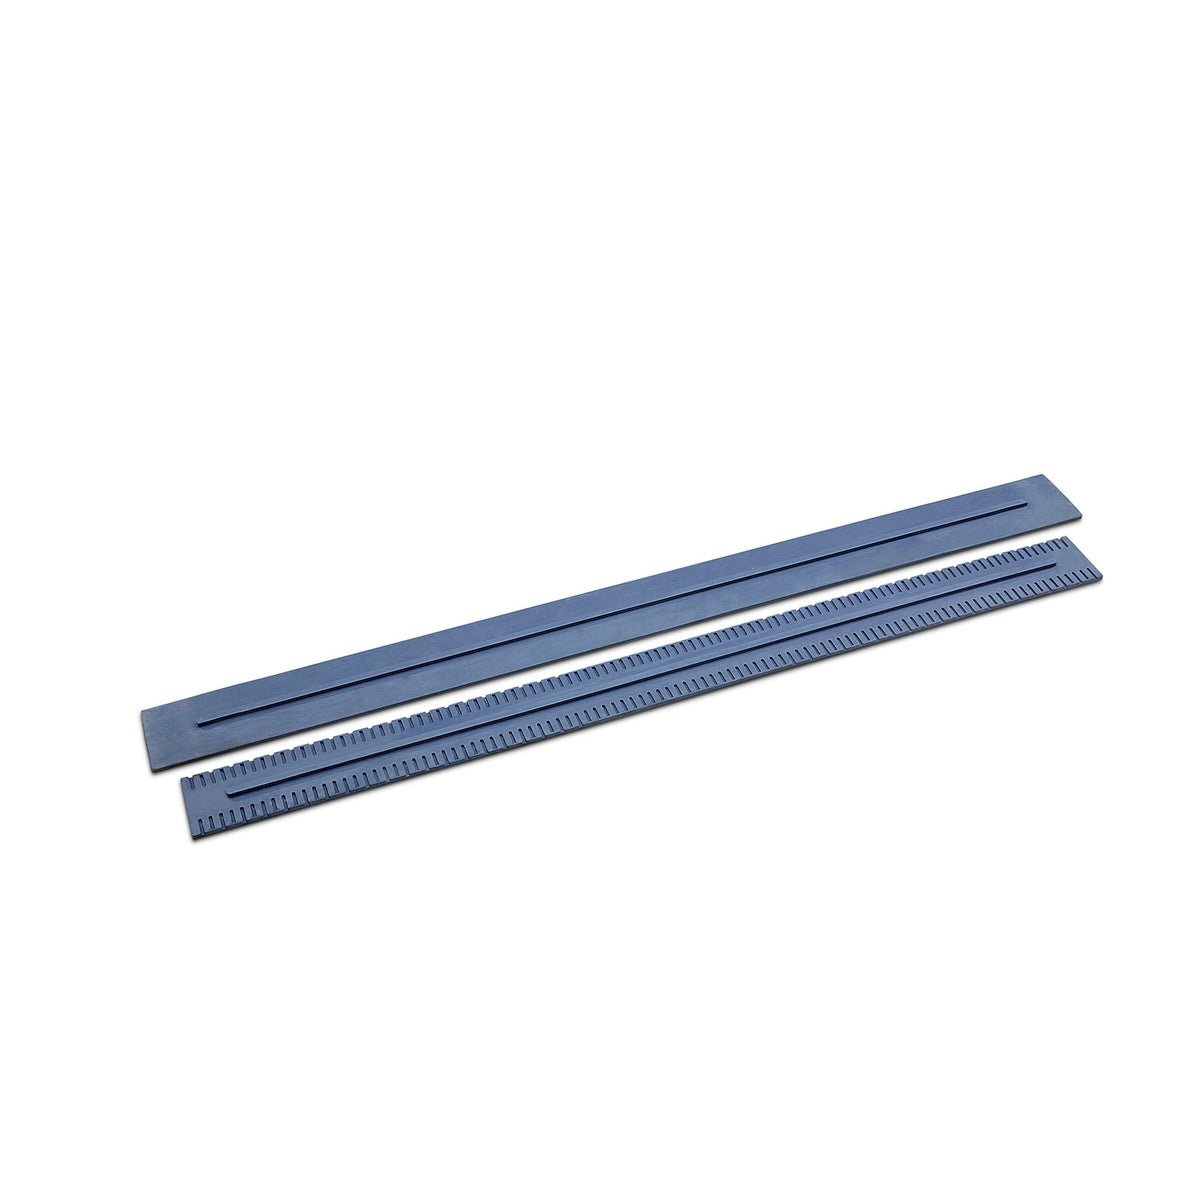 Karcher BD 80/100 - Squeegee blades, Natural rubber, 1230 mm